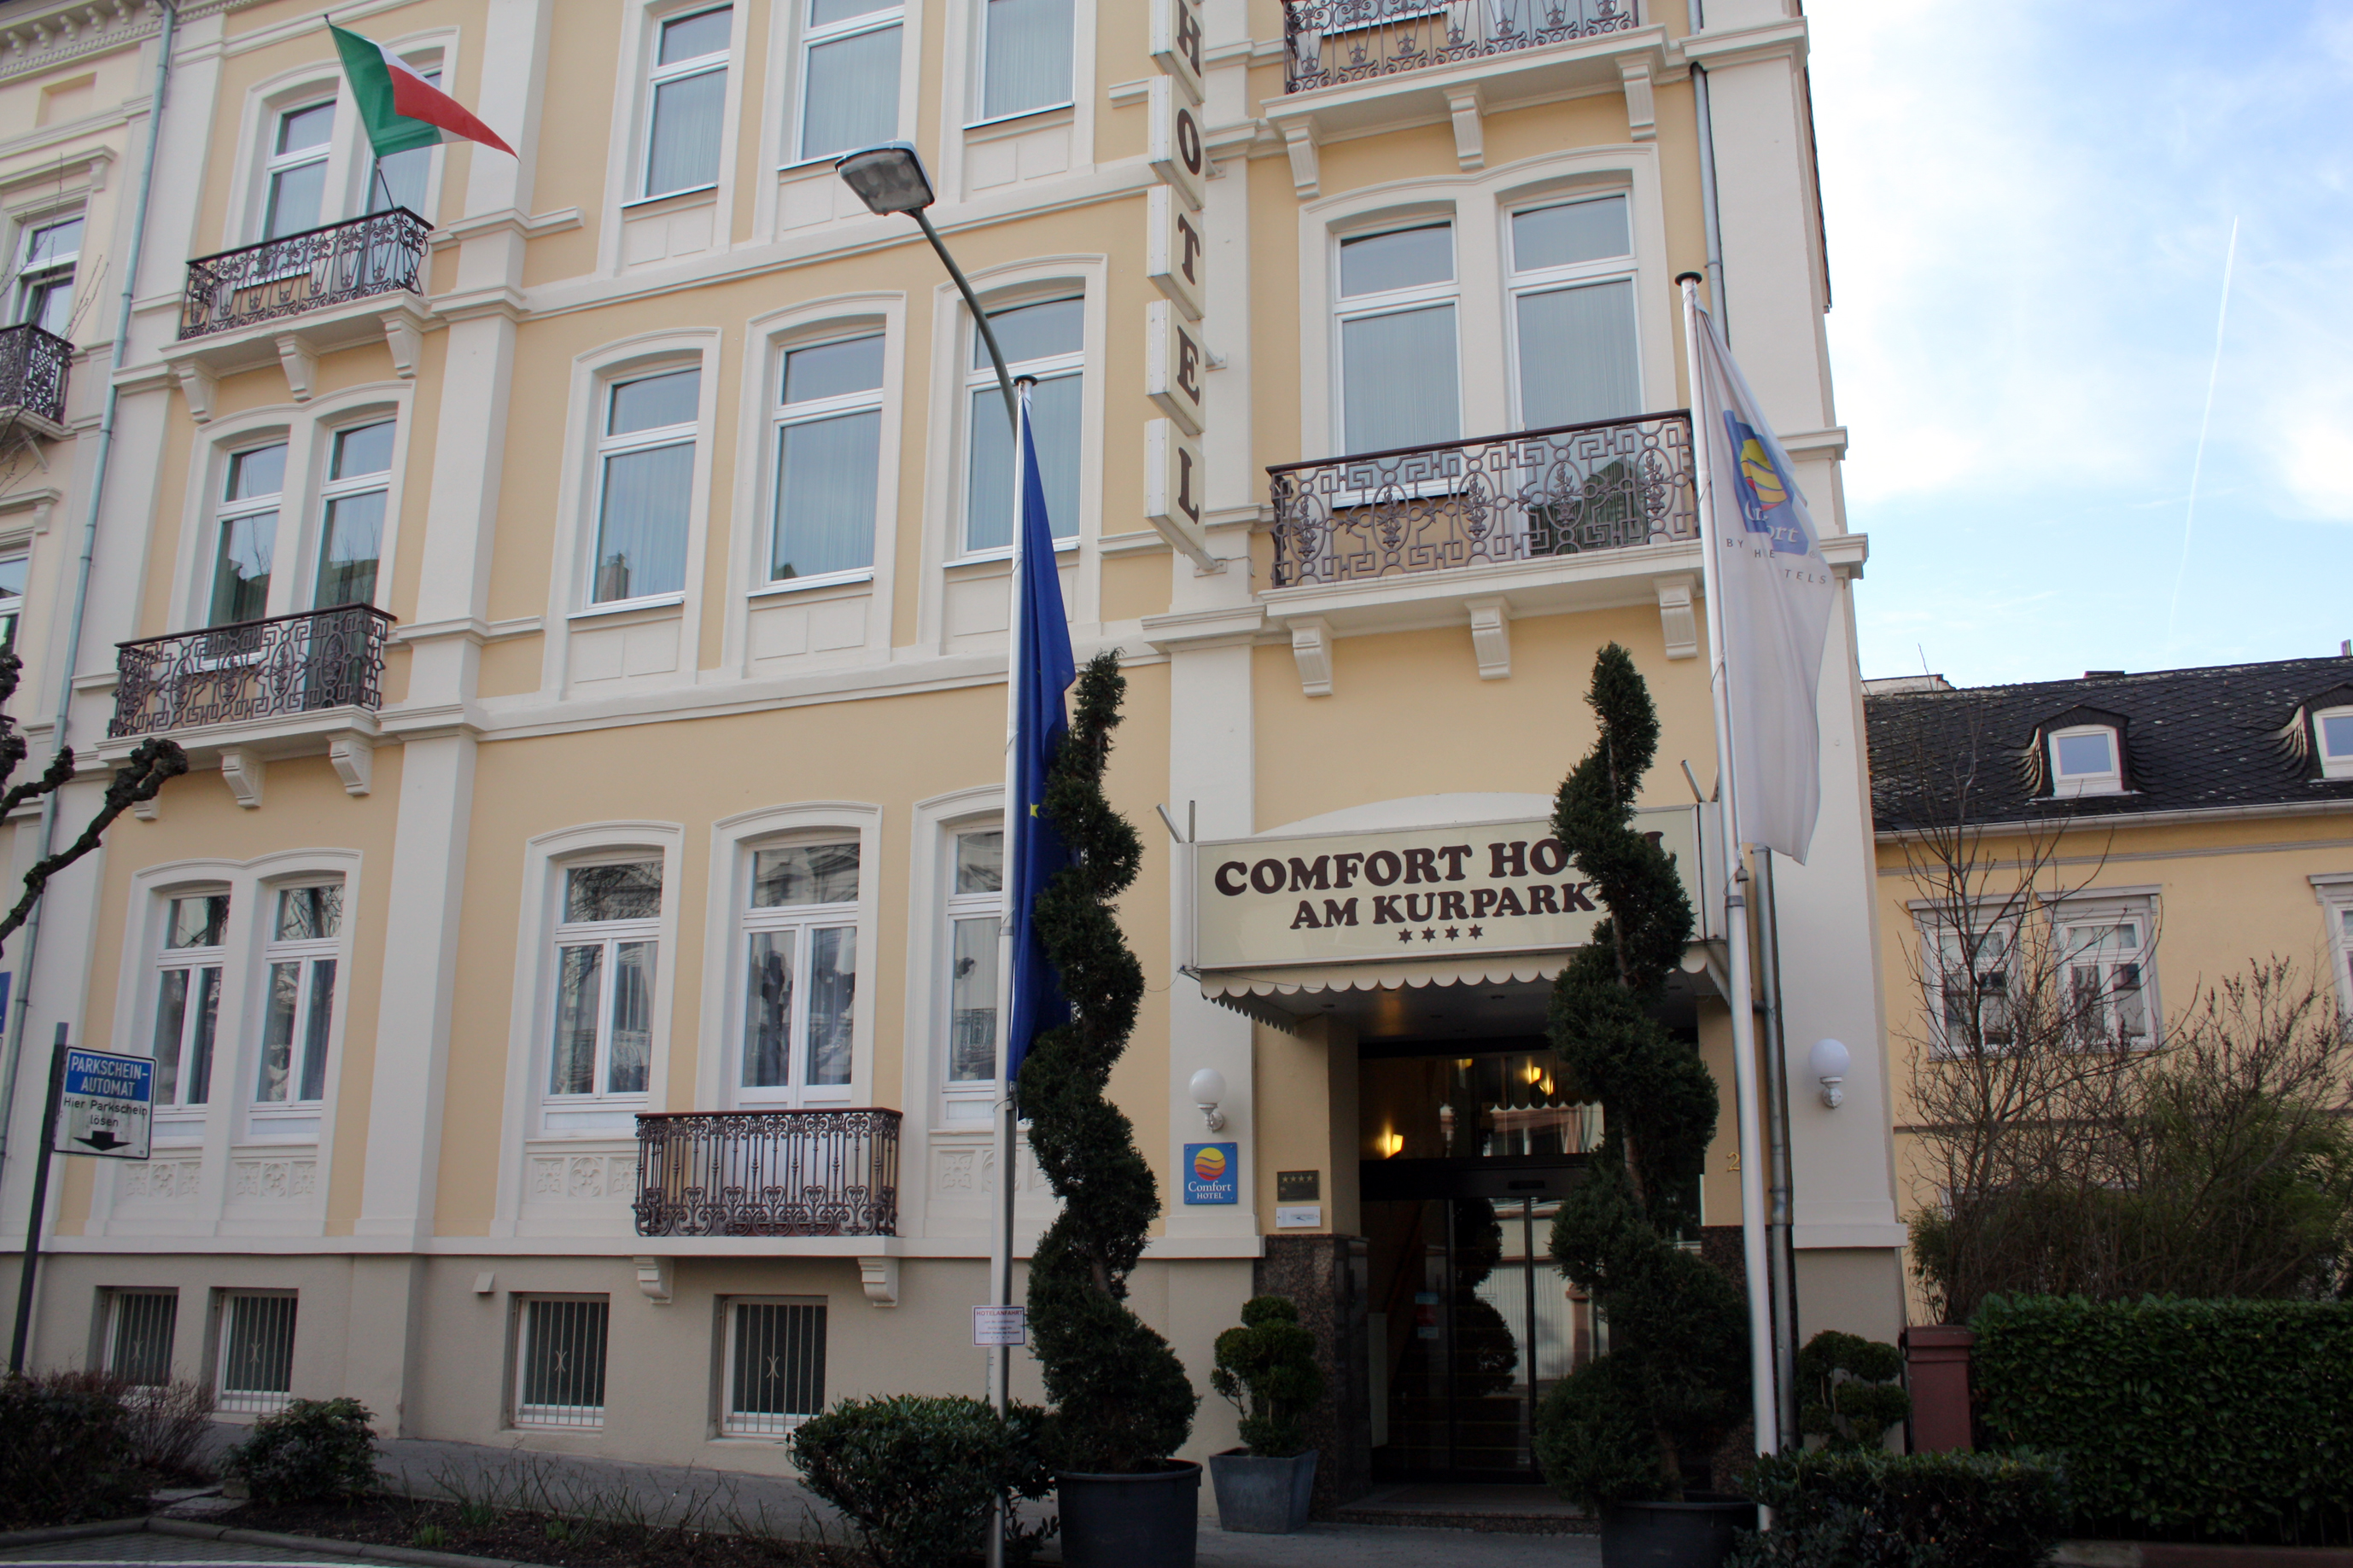 Comfort Hotel Am Kurpark, Bad Homburg.
